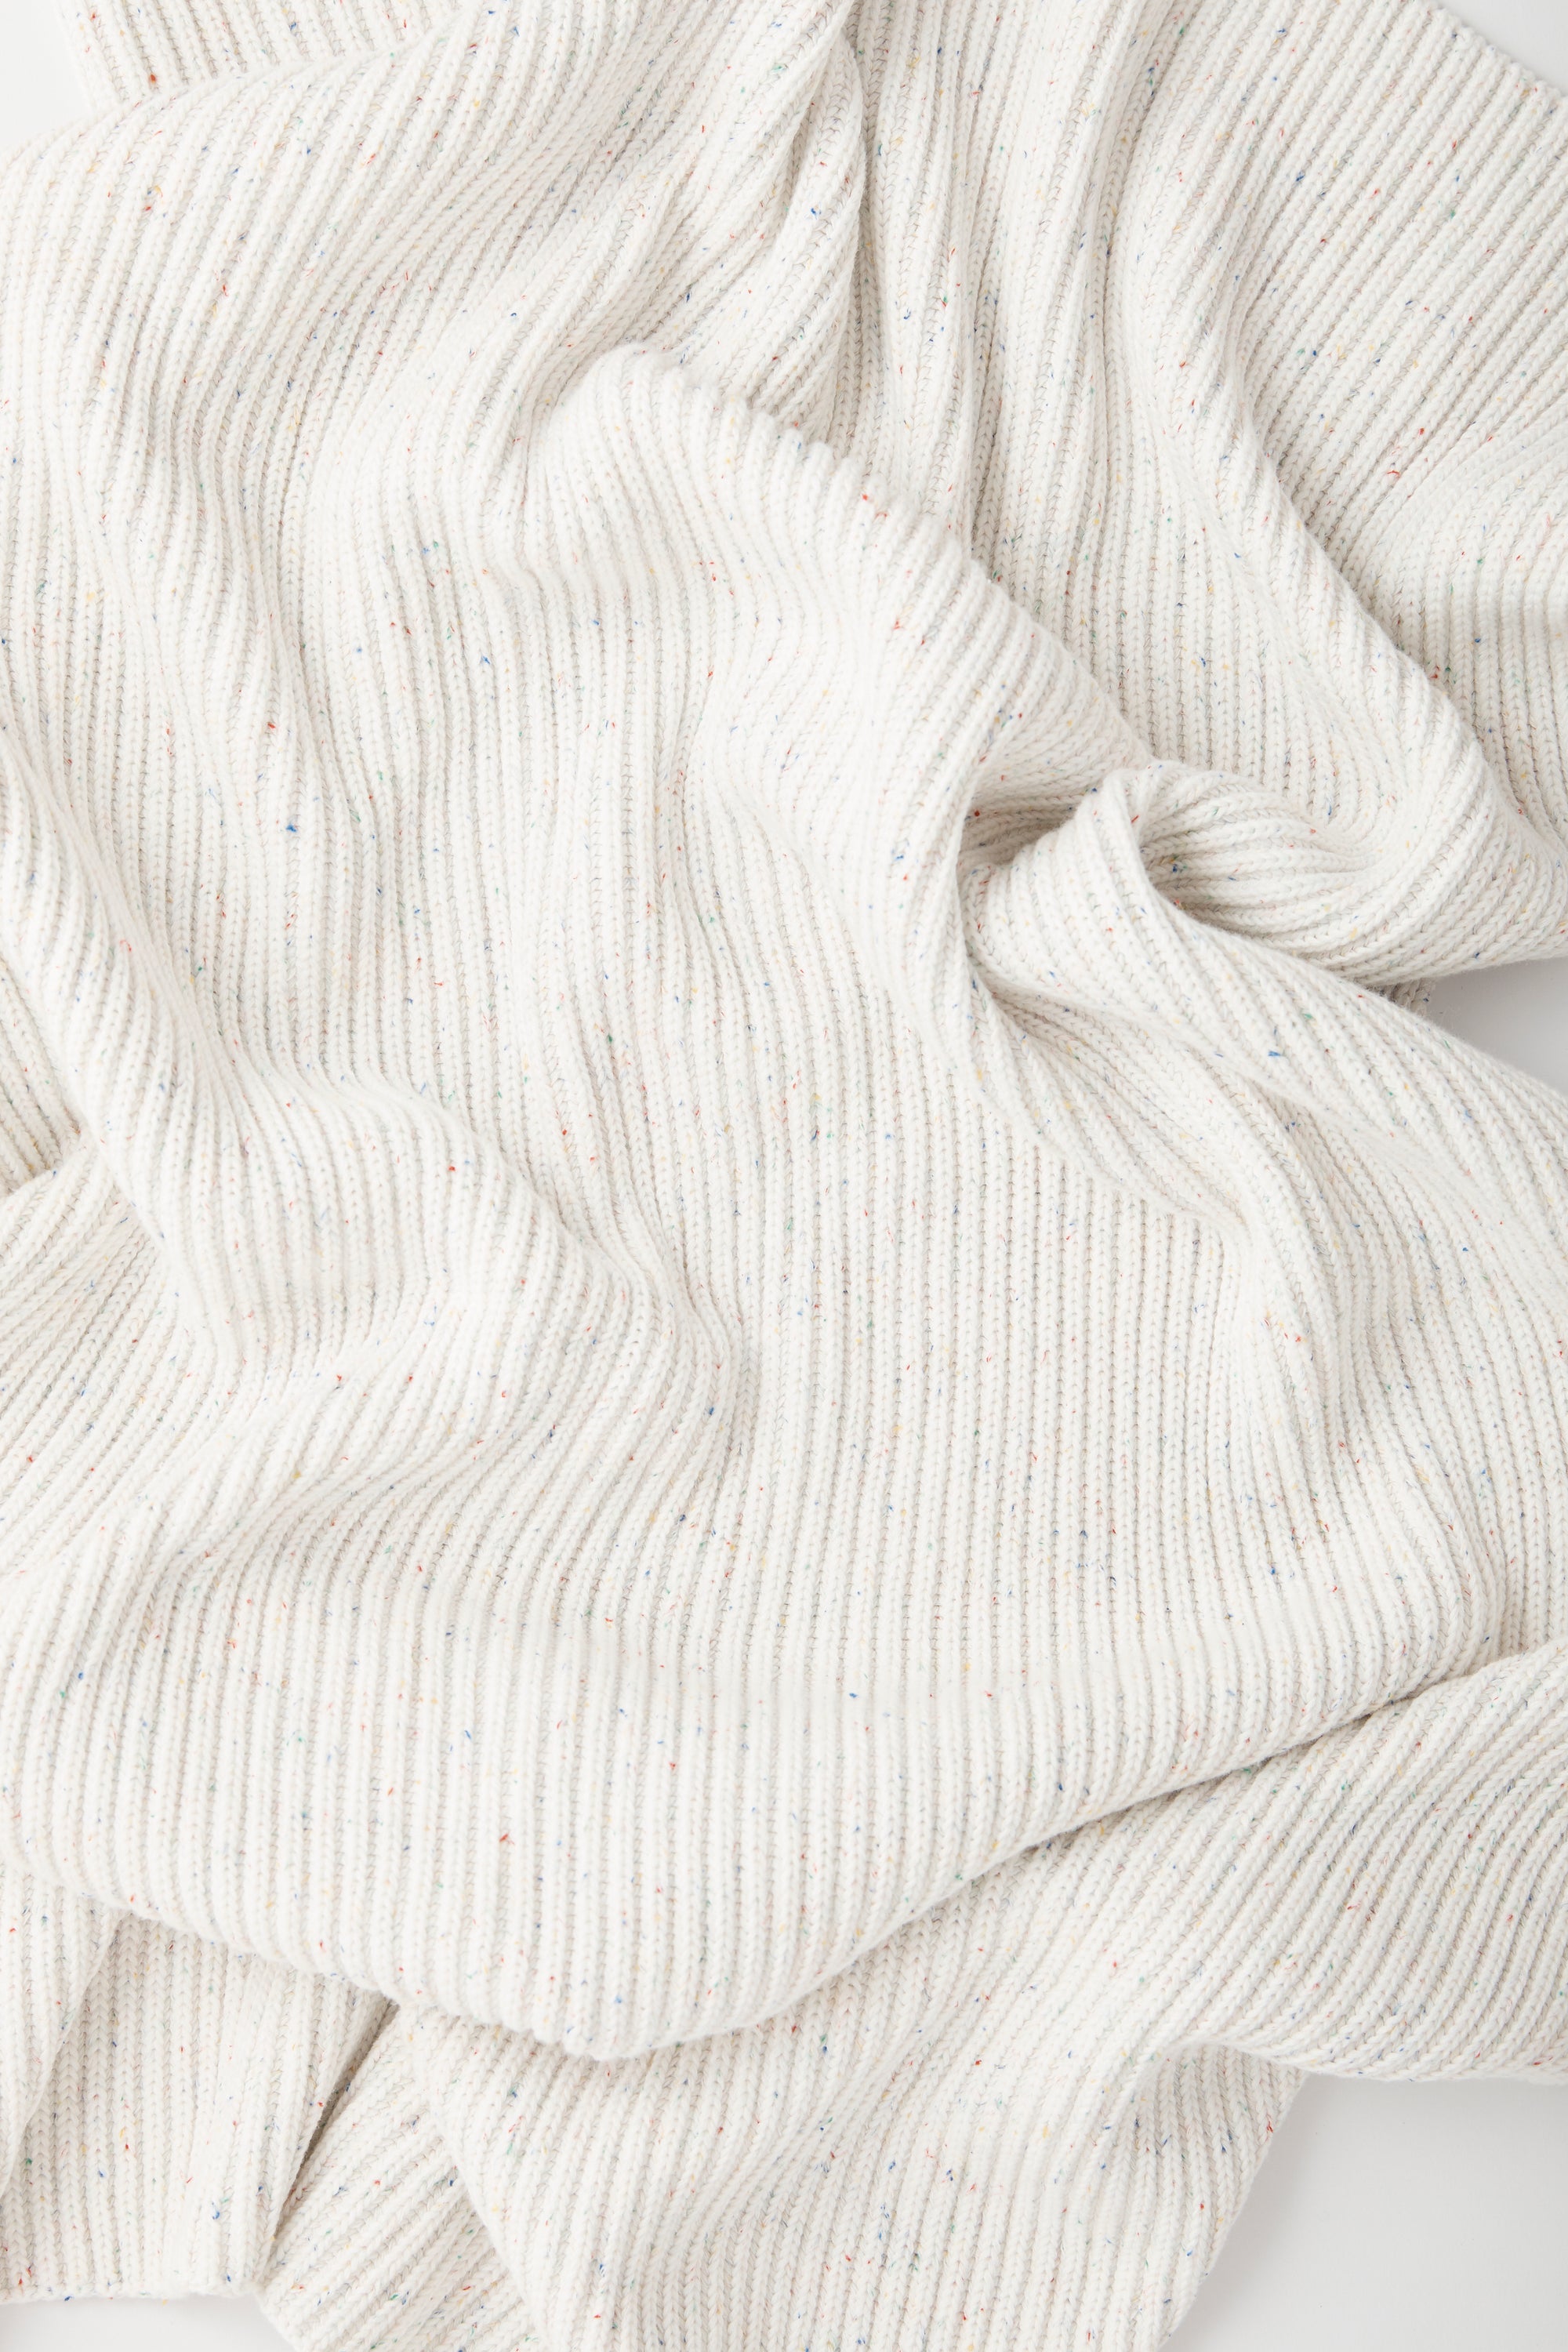 Organic Ribbed Blanket - Vanilla Speckles